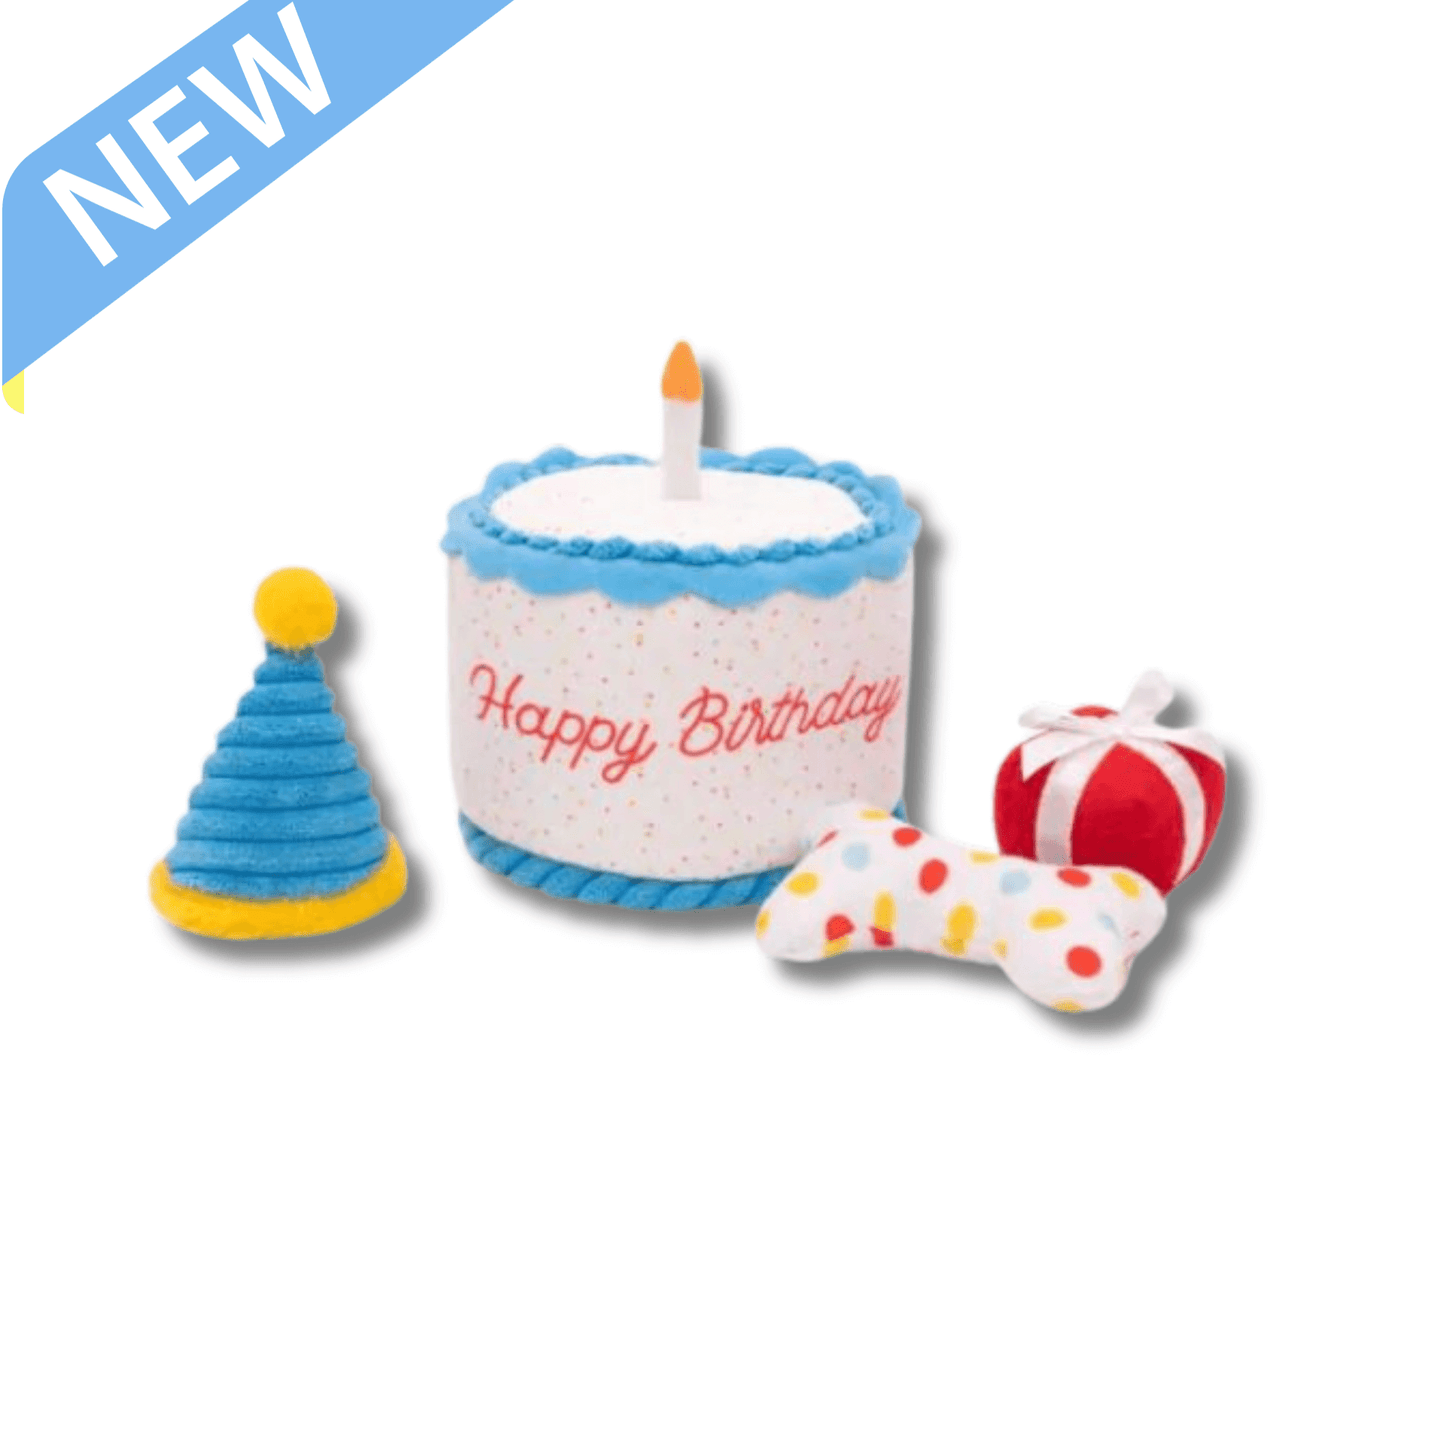 Happy birthday burrow, cake, hat and bone dog toy